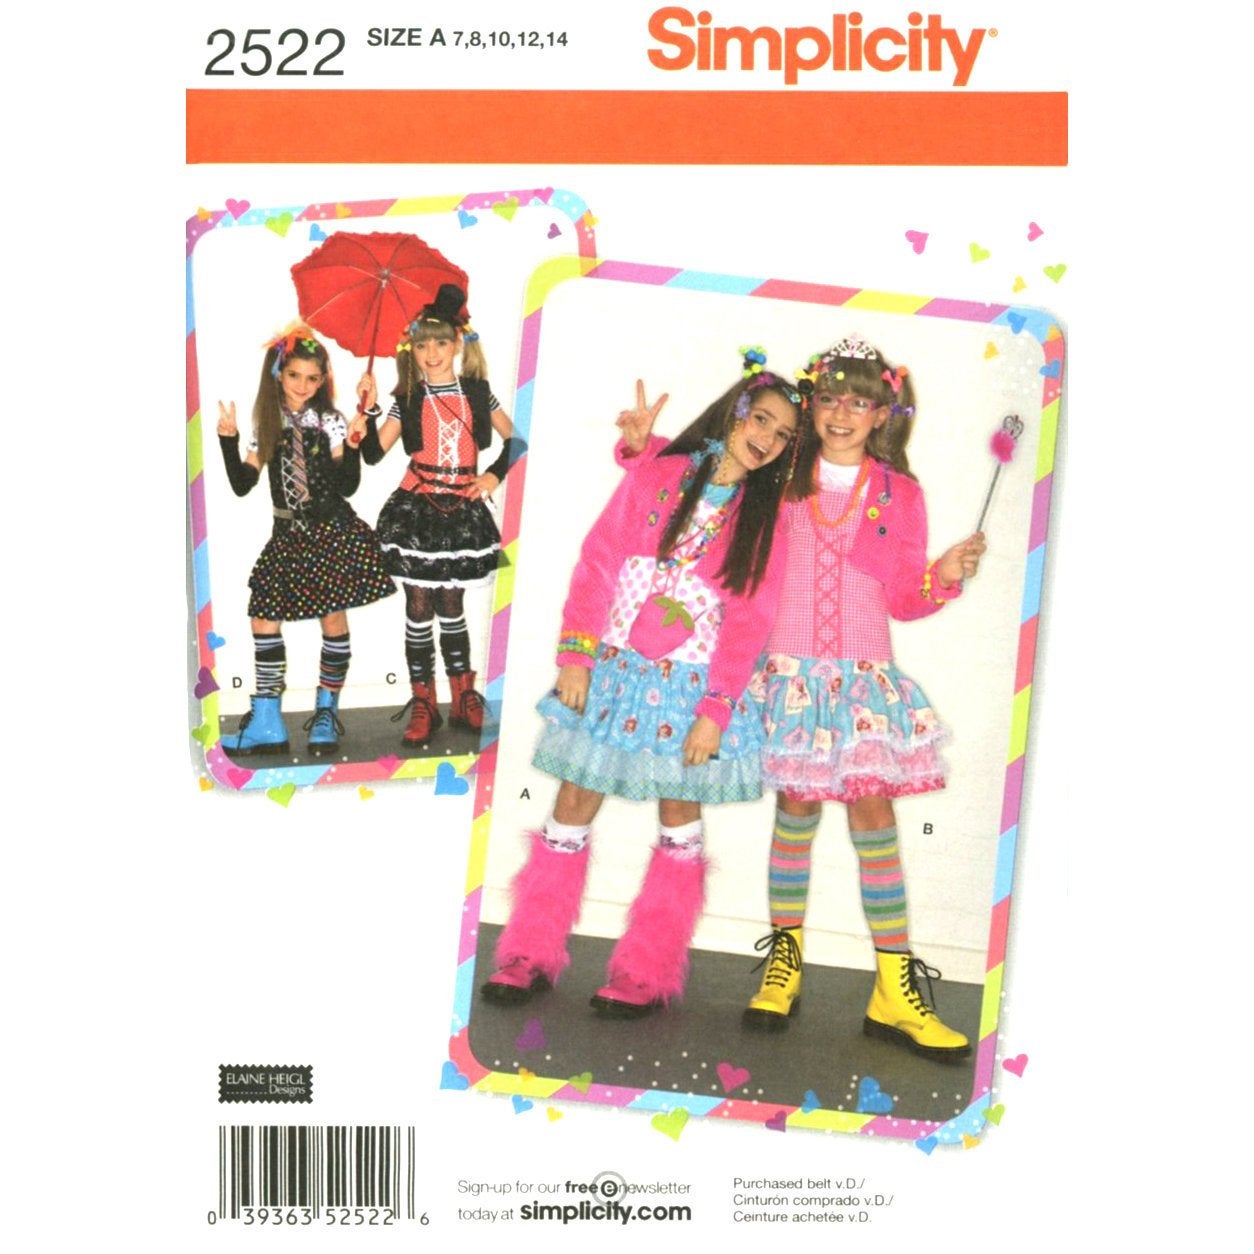 Simplicity 2522 girls sewing pattern